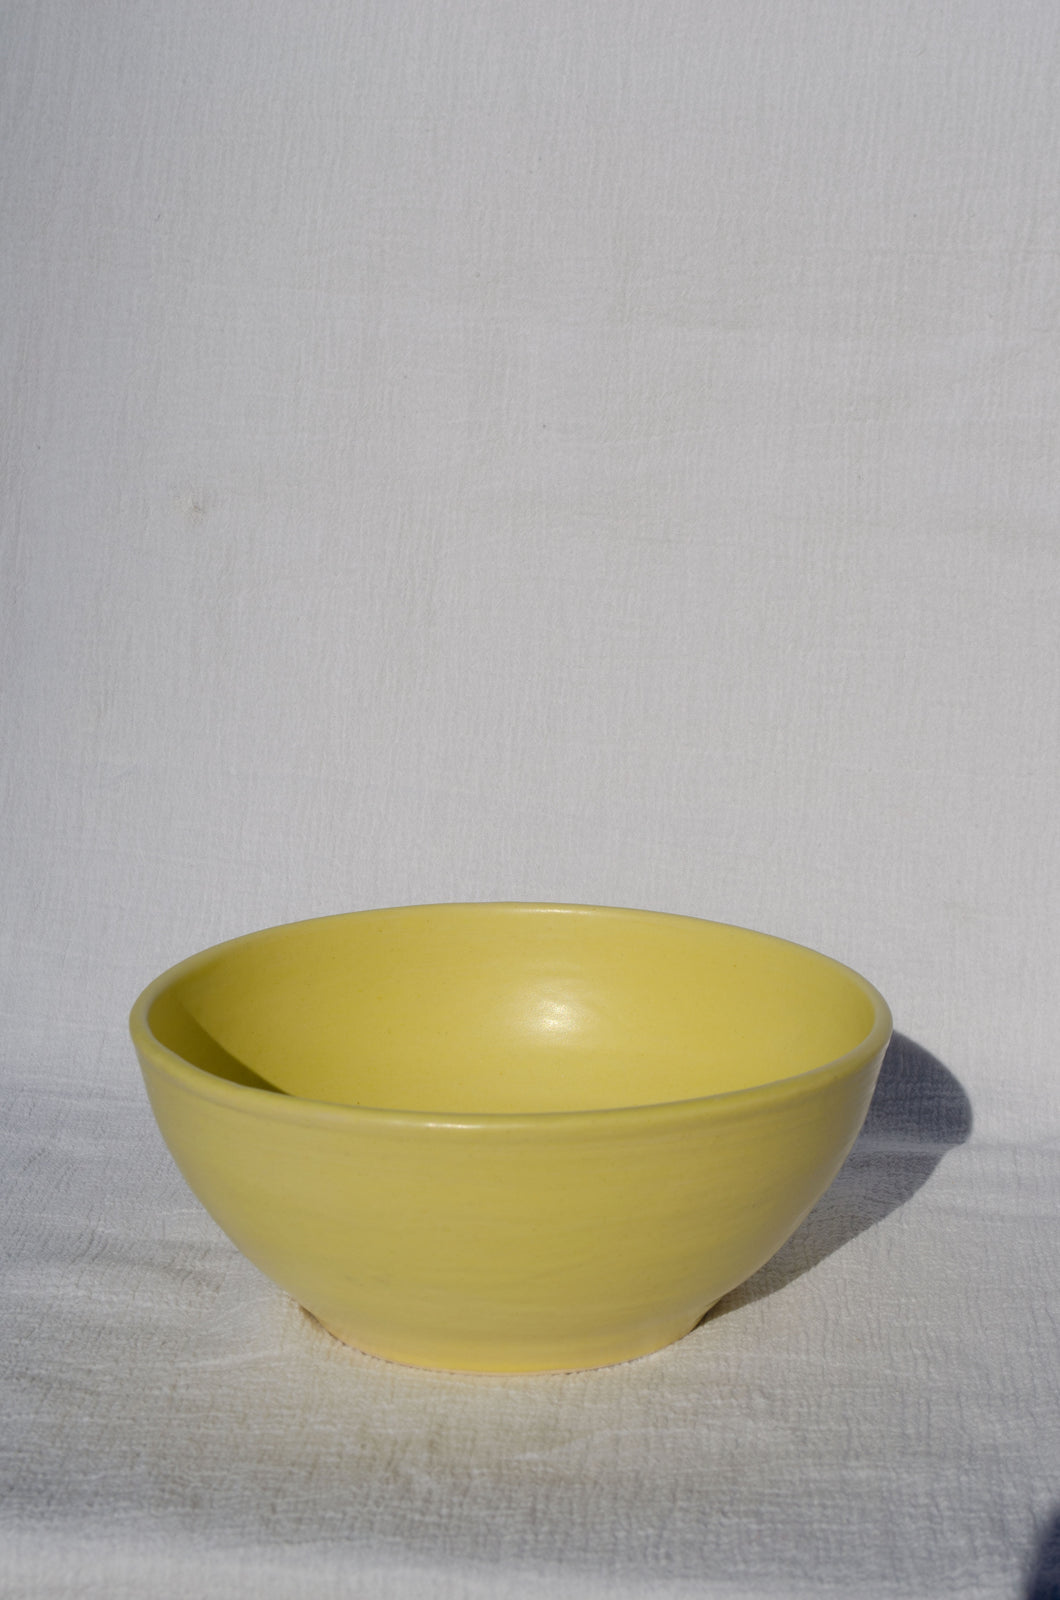 Bowl in Lemon